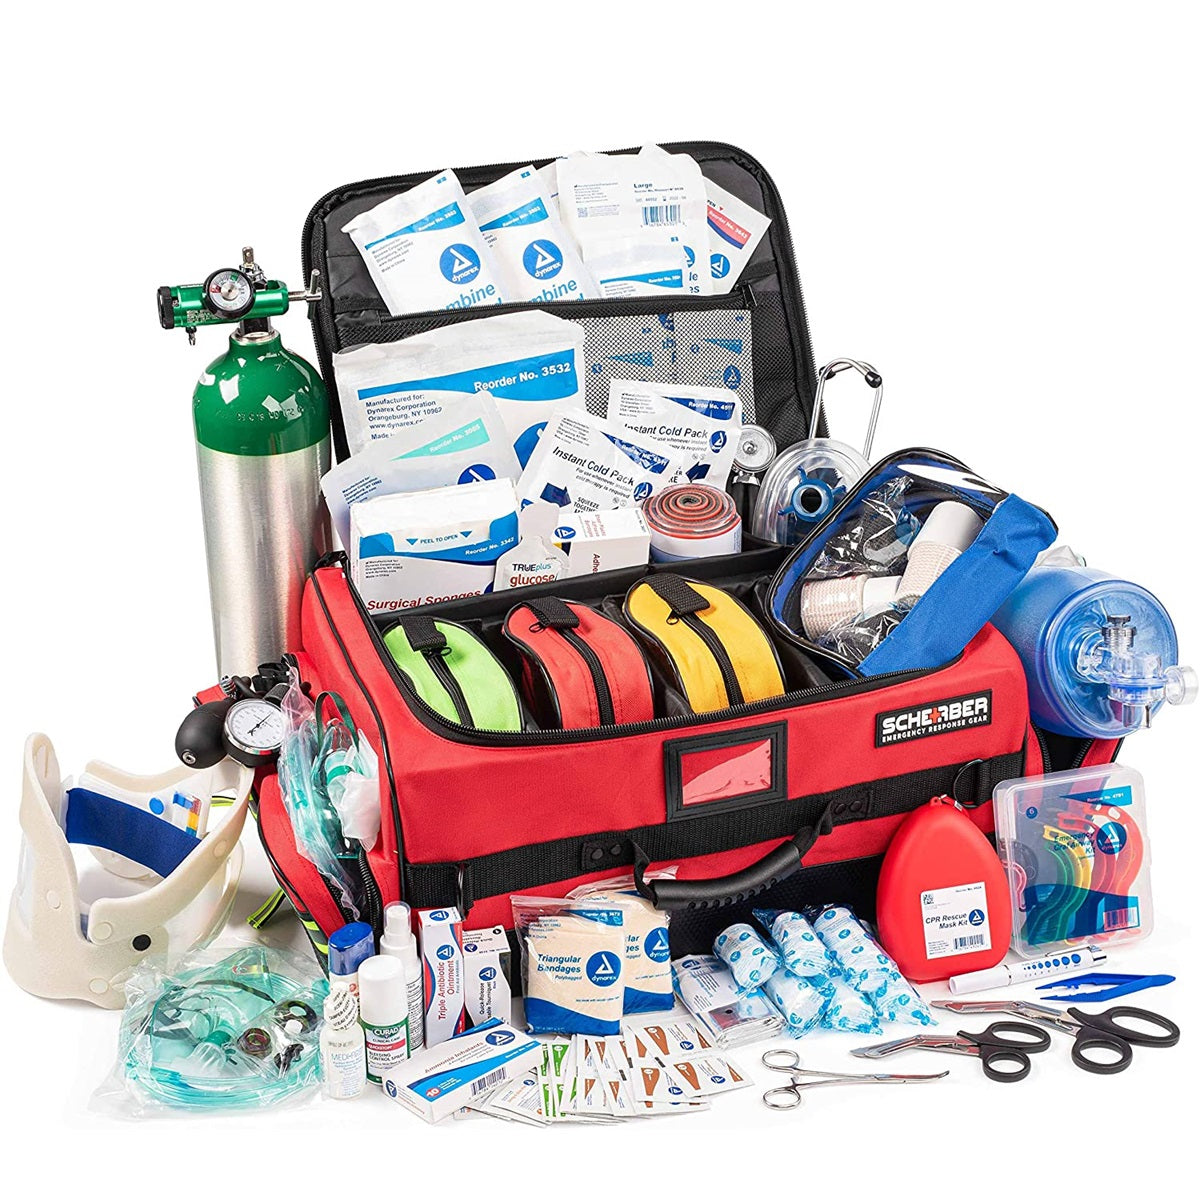 Scherber Fully Stocked EMT and EMS Trauma Kits